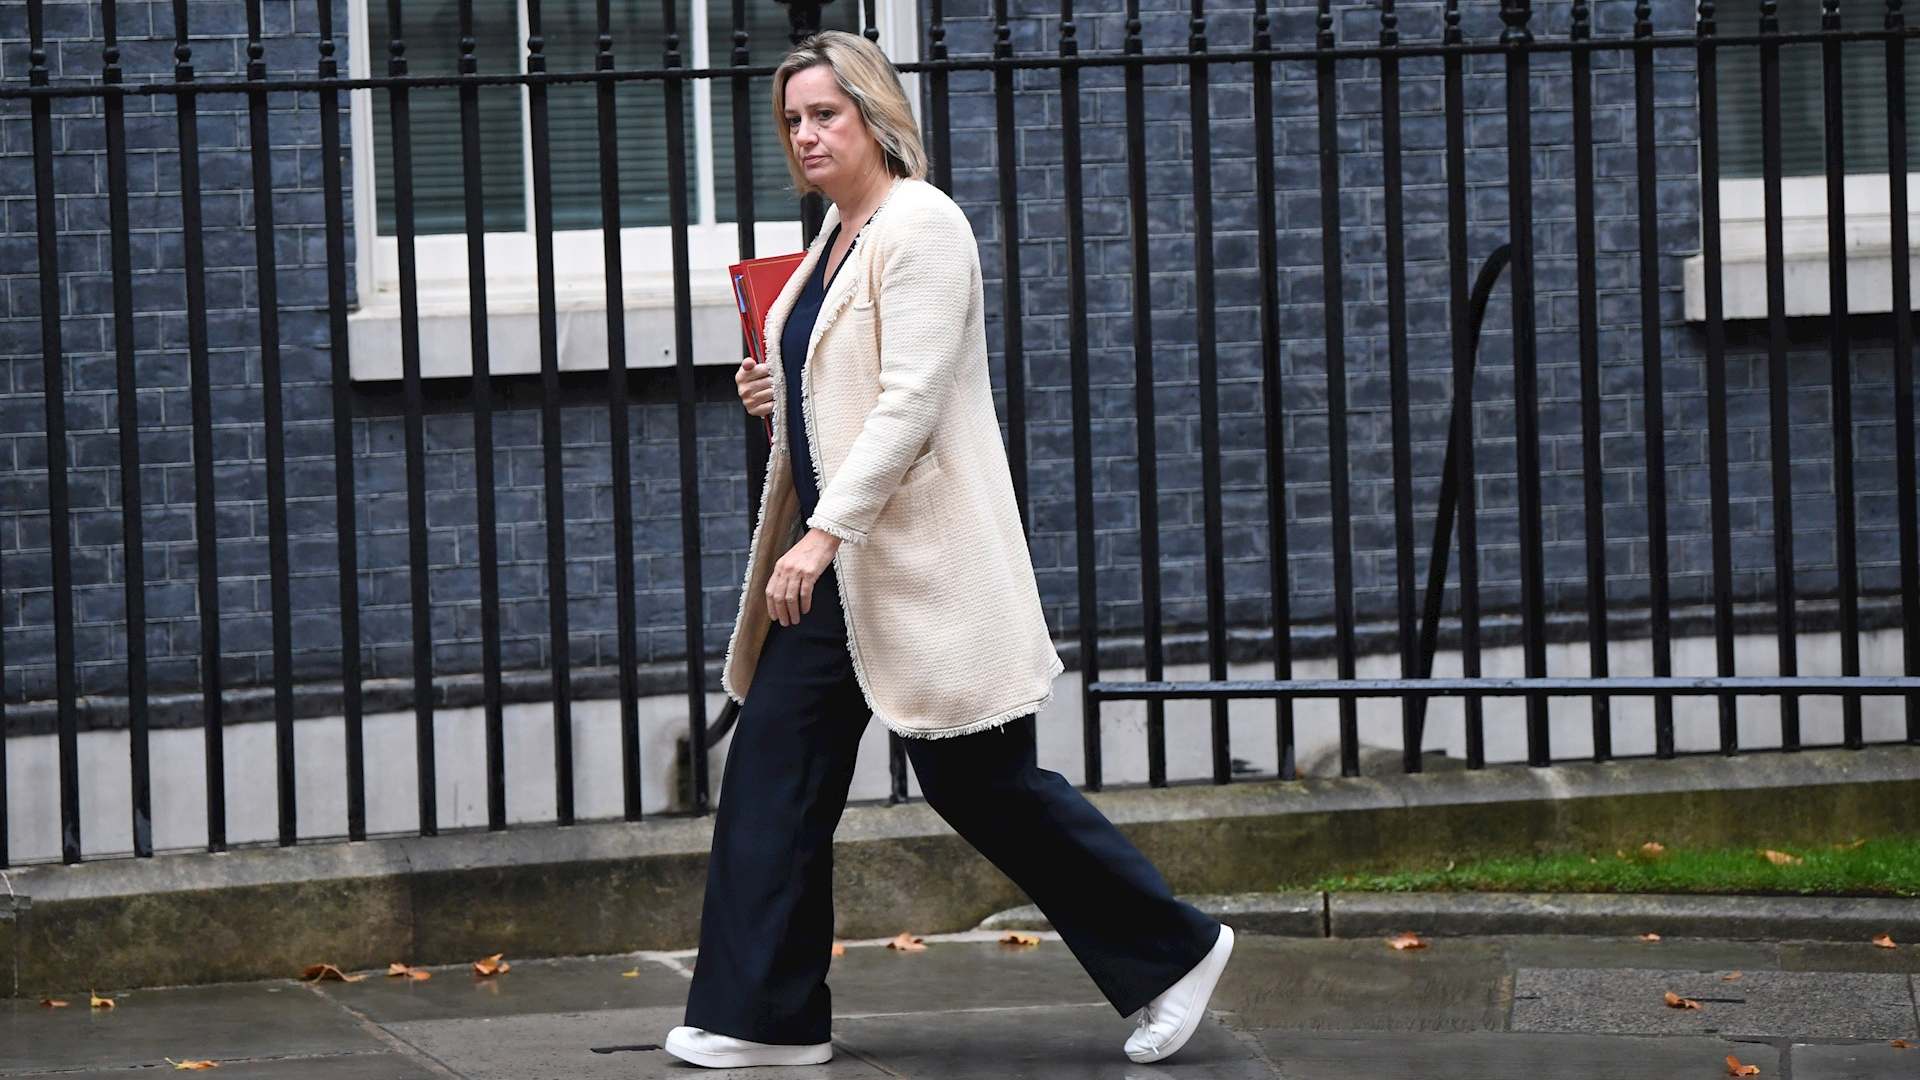 La ministra de Trabajo británica dimite tras la "matanza" de diputados anti-Brexit duro de Johnson